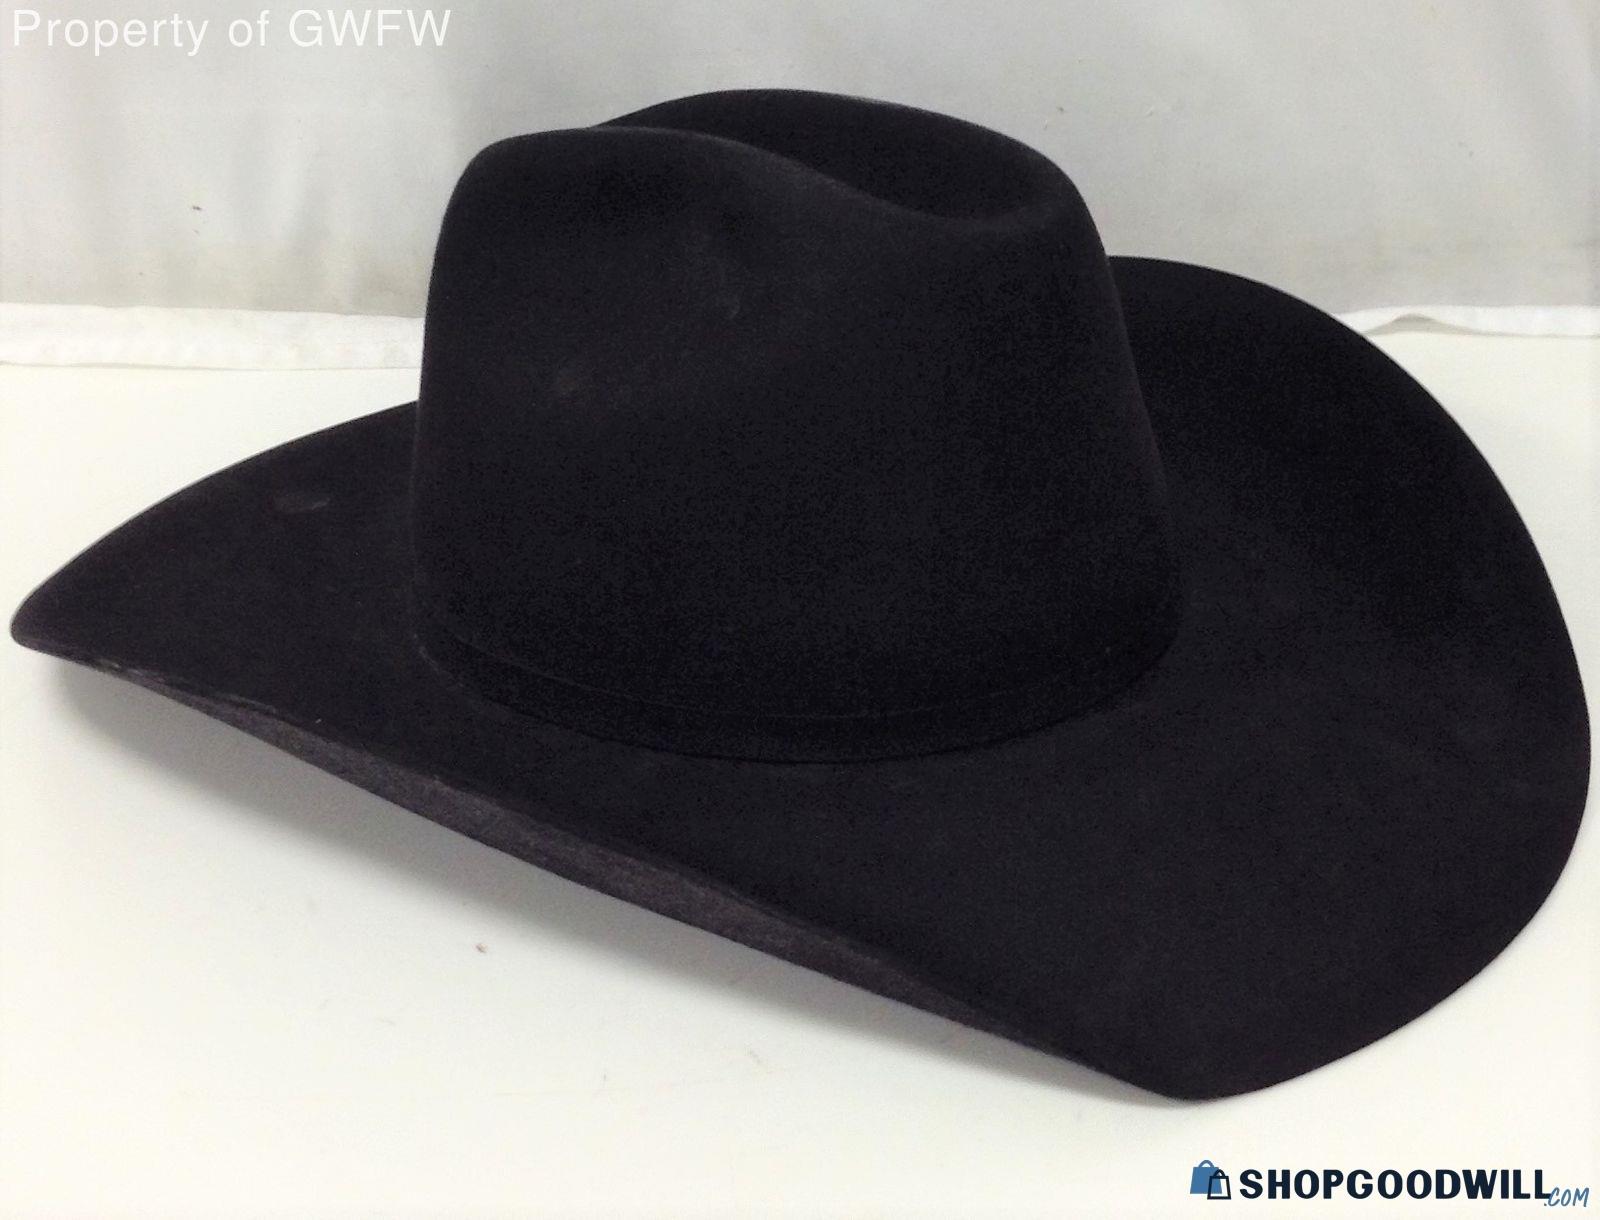 Bailey 100X Black Size 7 1/2 Cowboy Hat - shopgoodwill.com